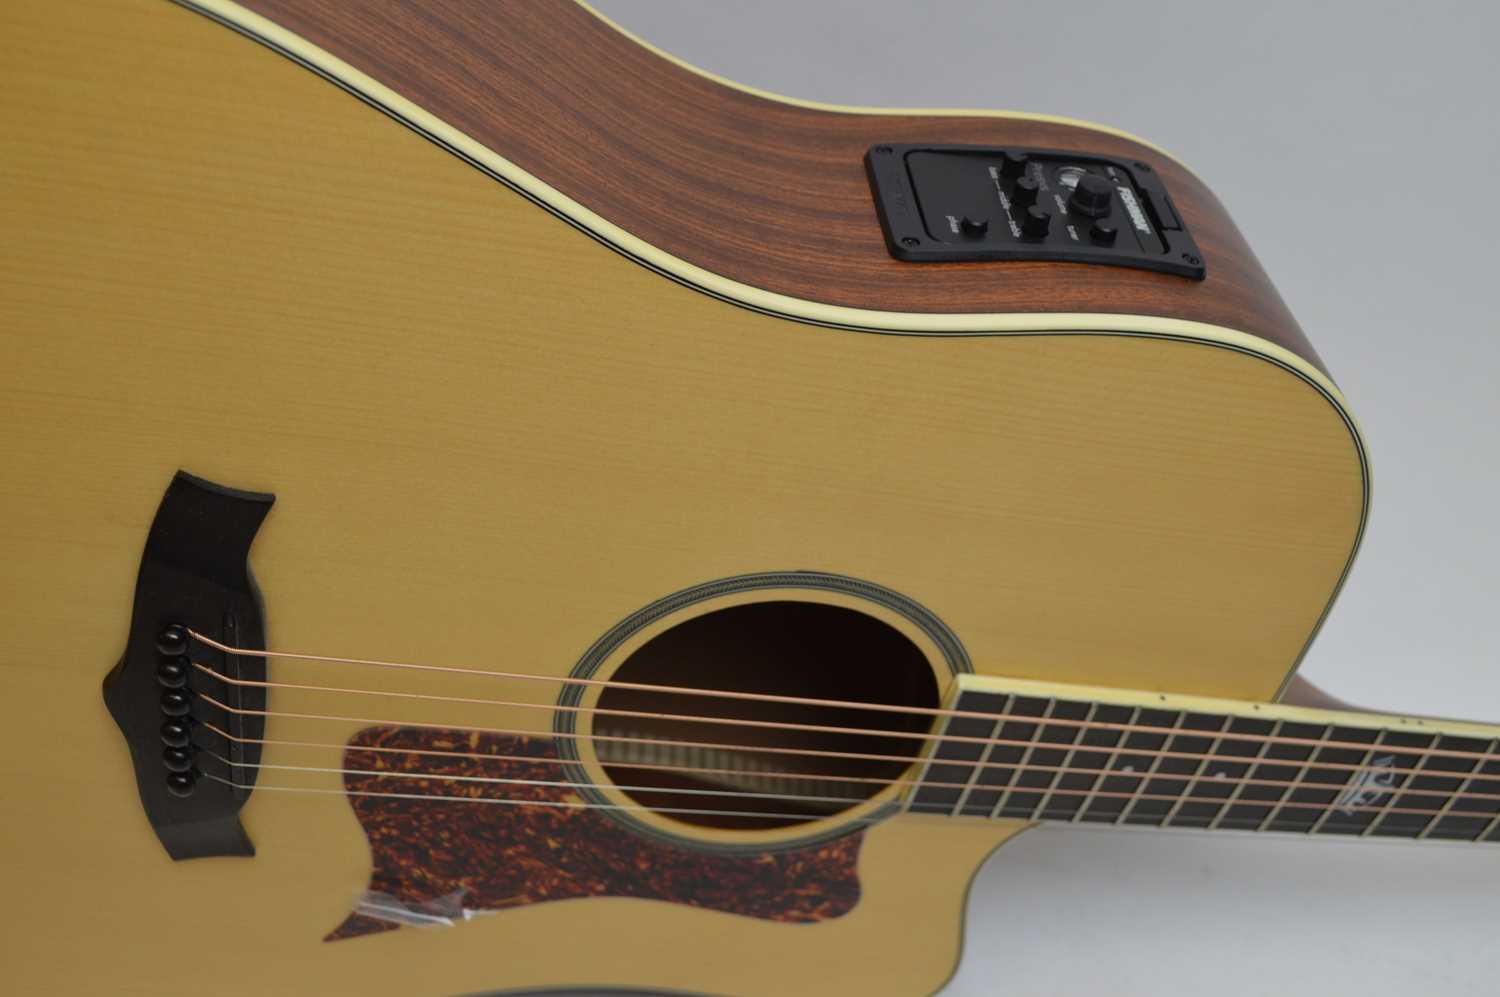 Lot 440 - A Tanglewood acoustic guitar model 'Sundance Premier' TSP-15CF